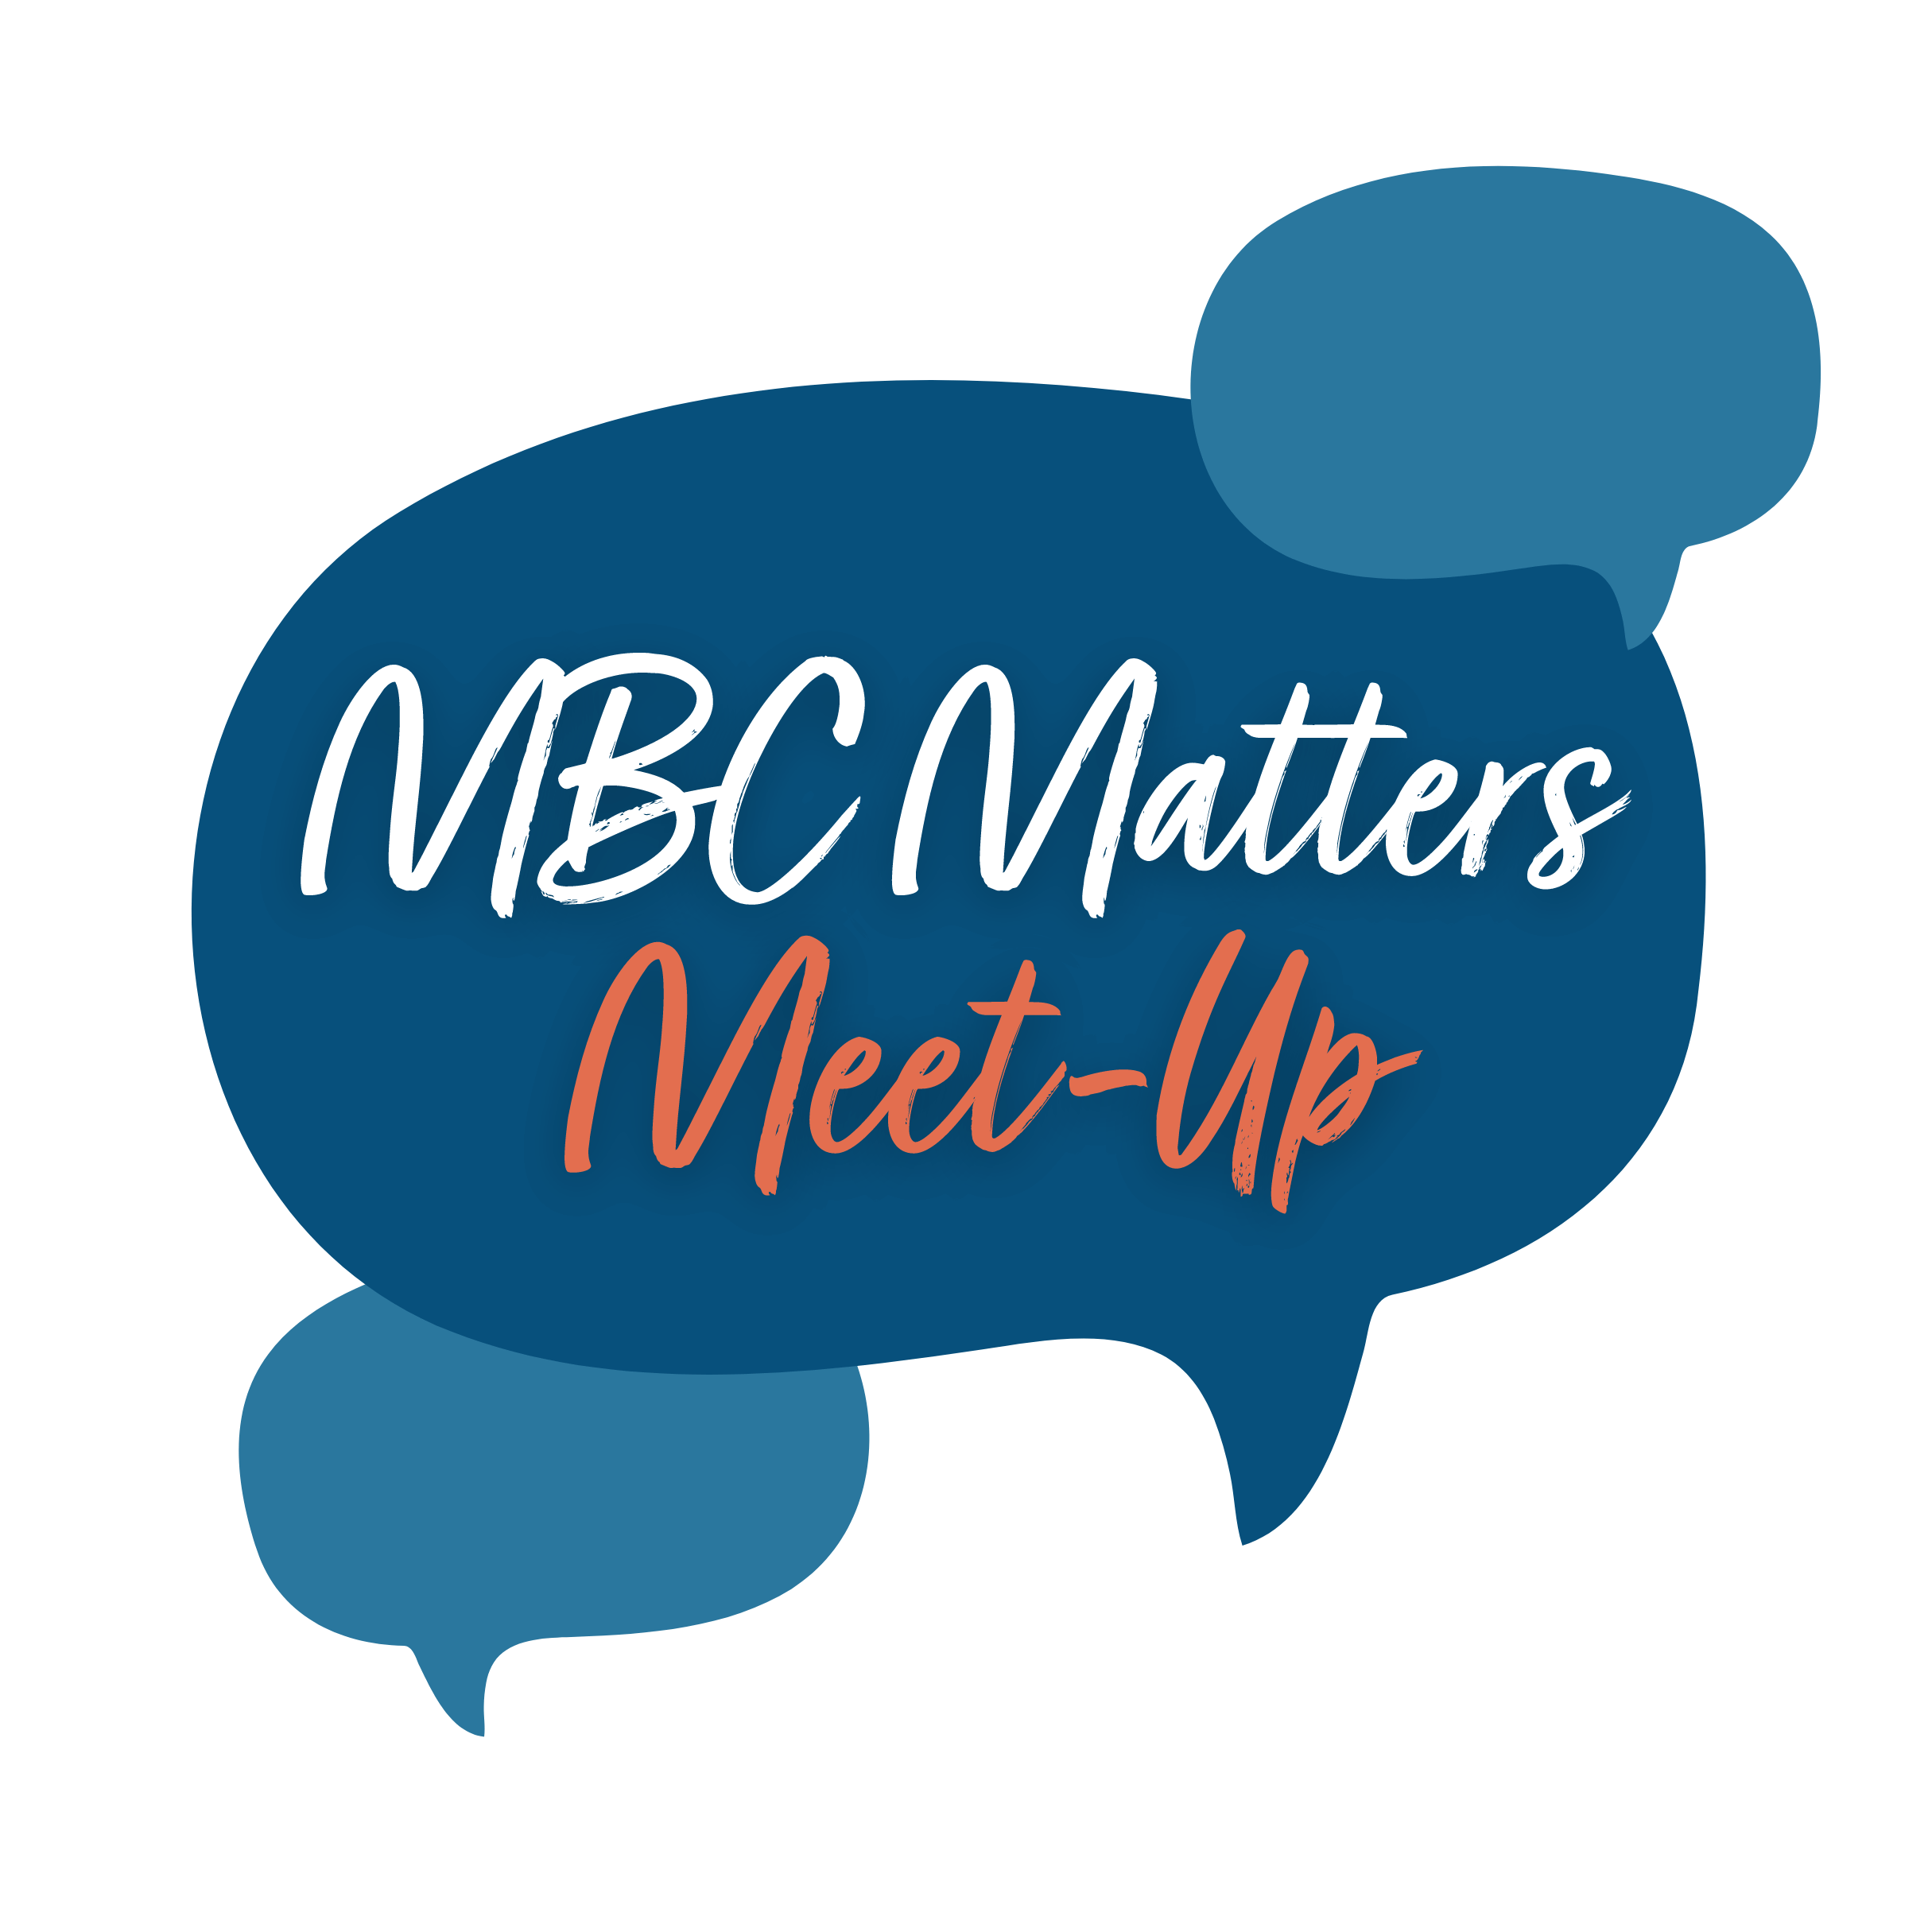 USE-MBC-Matters-Meet-Up-LogoIcon1